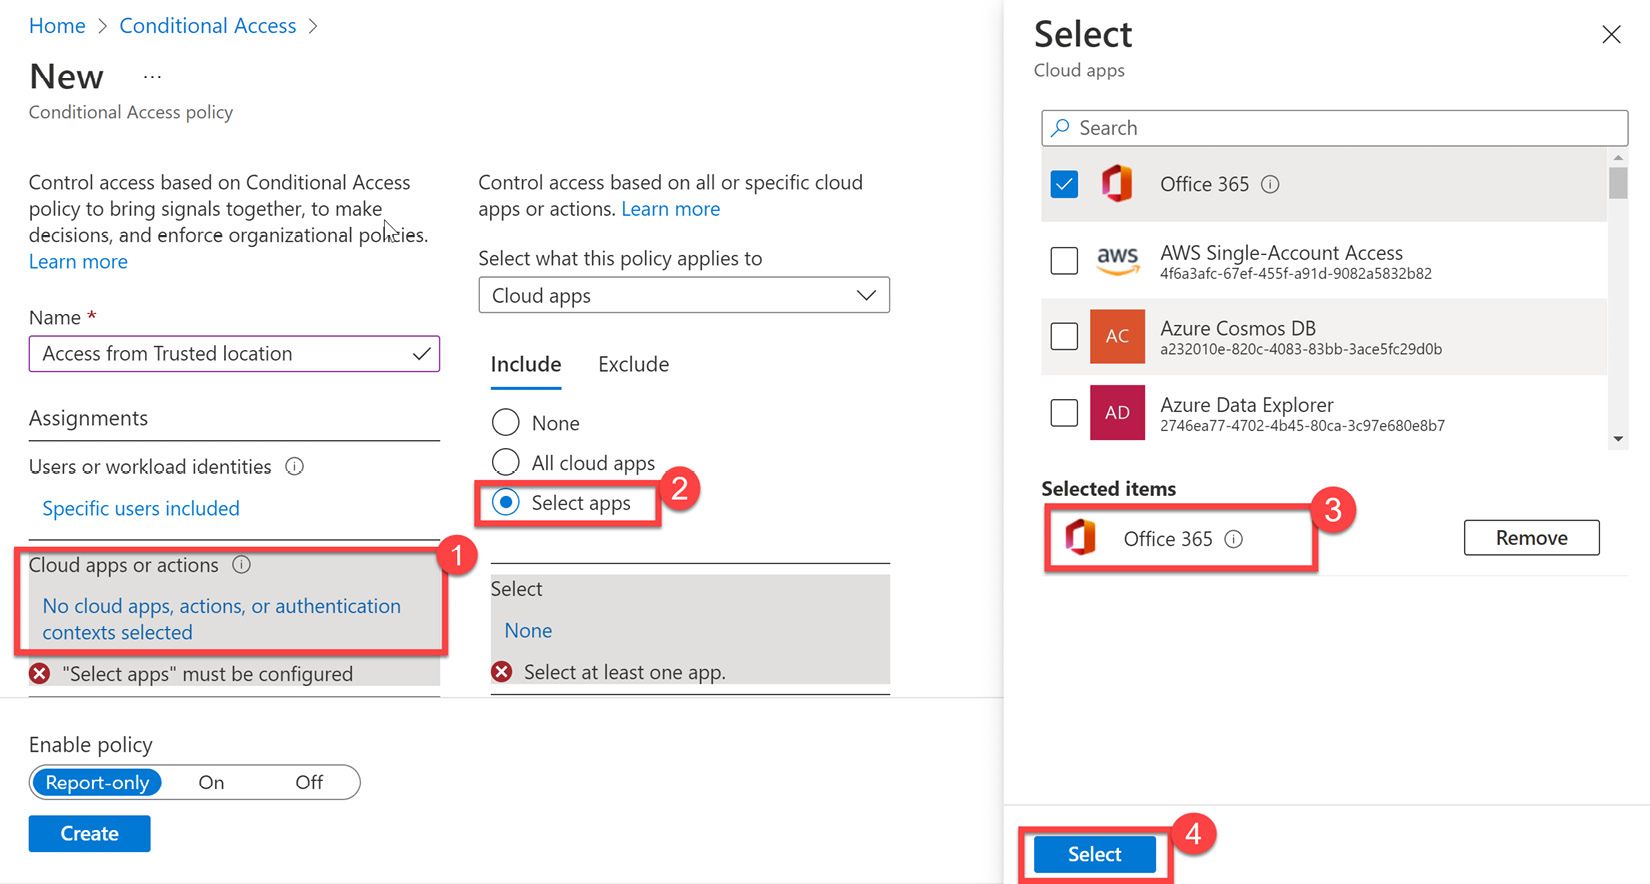 Figure 9.12 – Selecting Office 365 as a cloud app
